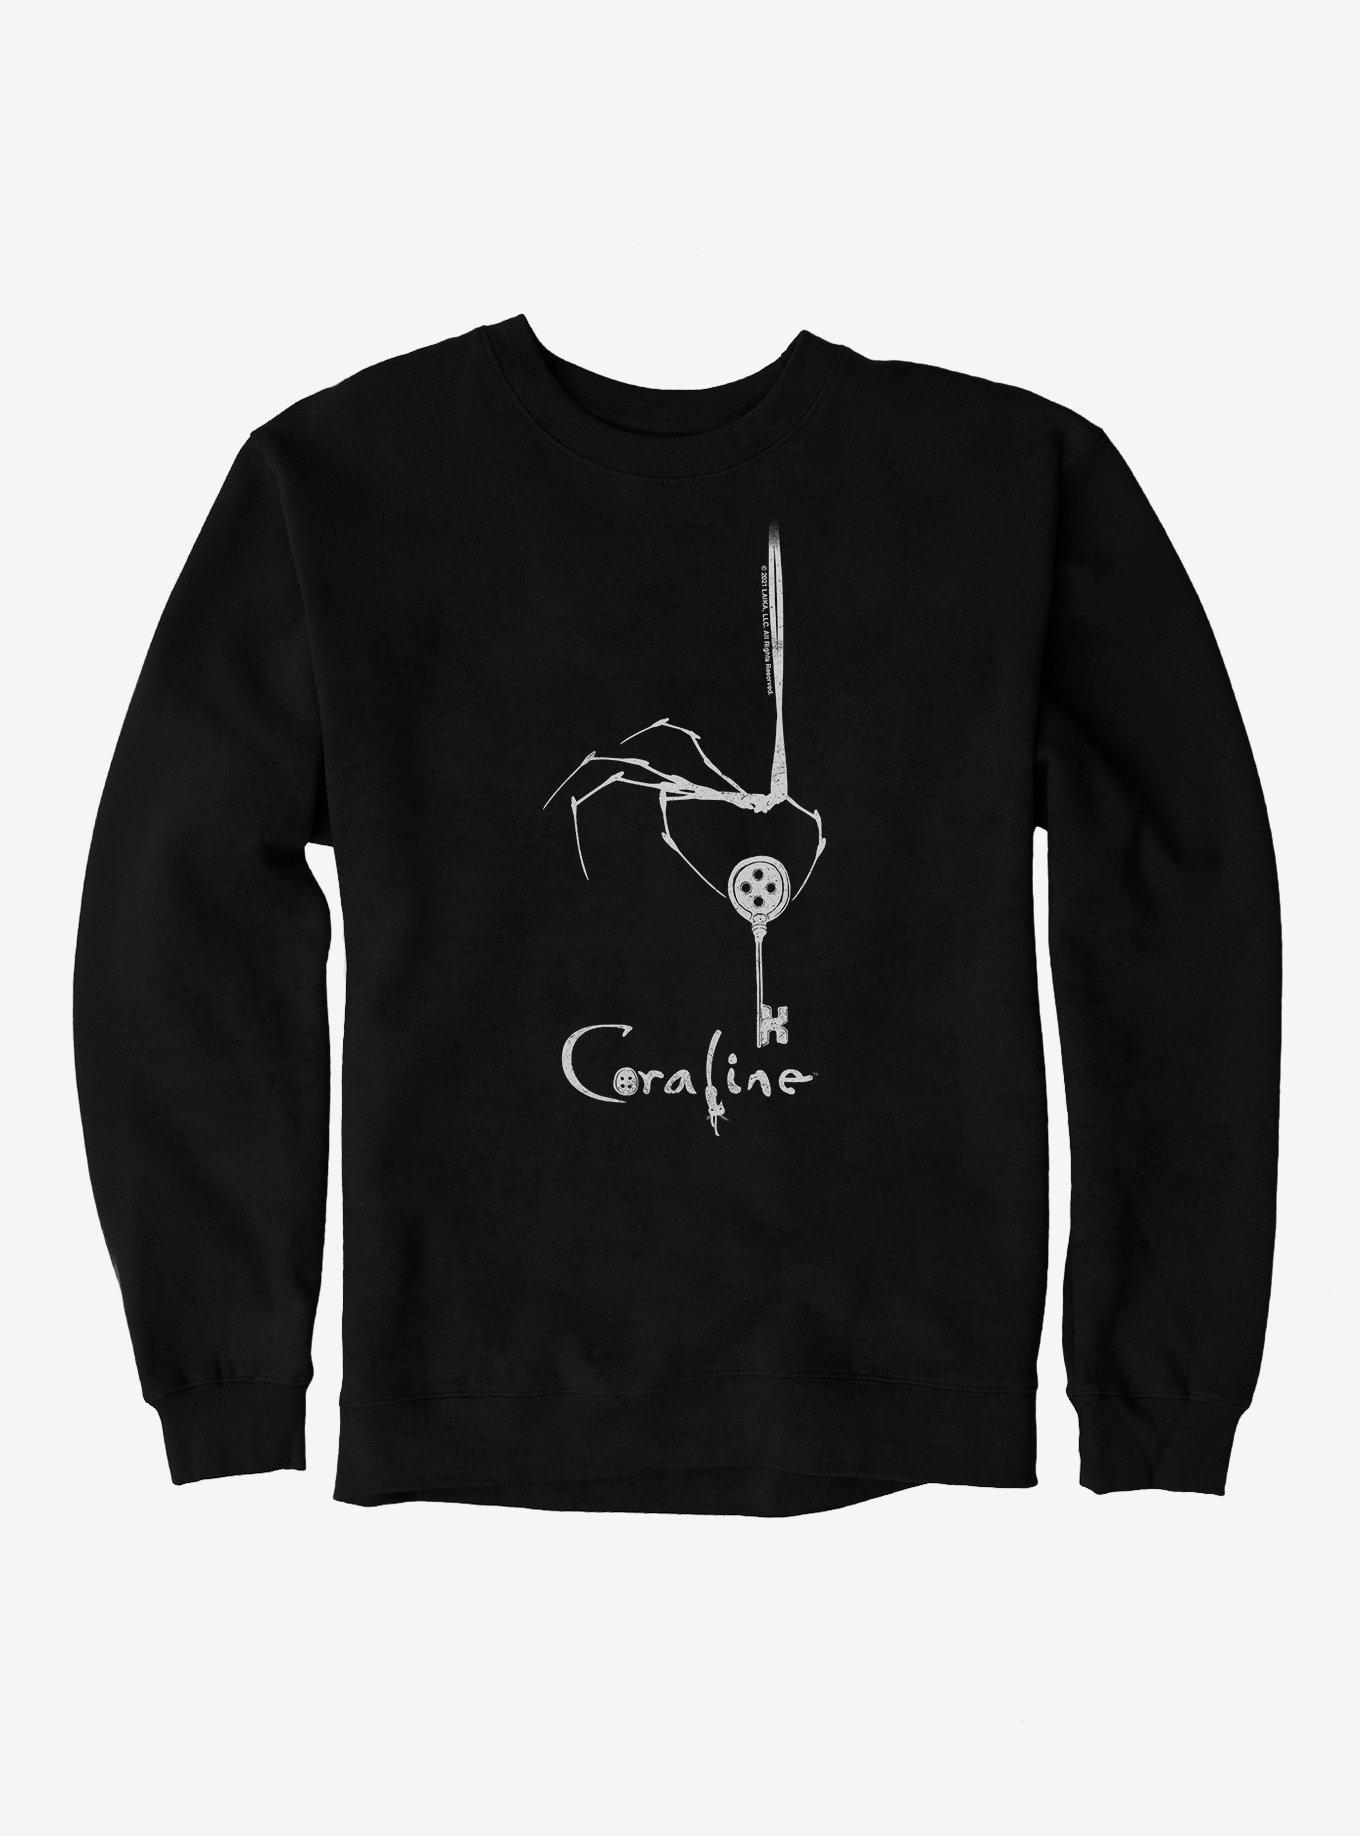 Coraline Skeleton Key Sweatshirt